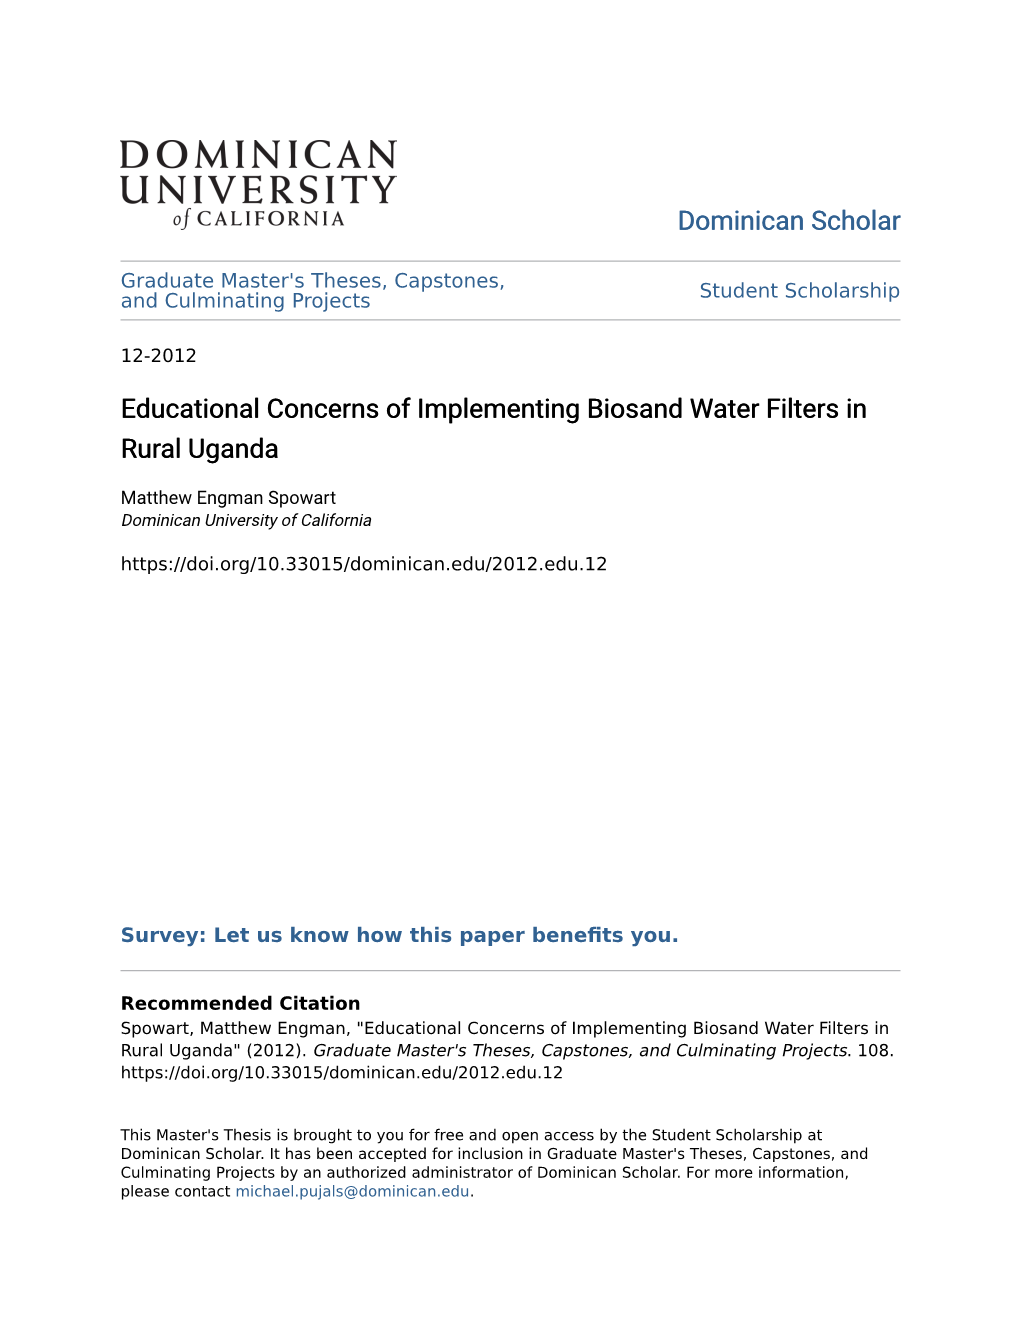 Educational Concerns of Implementing Biosand Water Filters in Rural Uganda